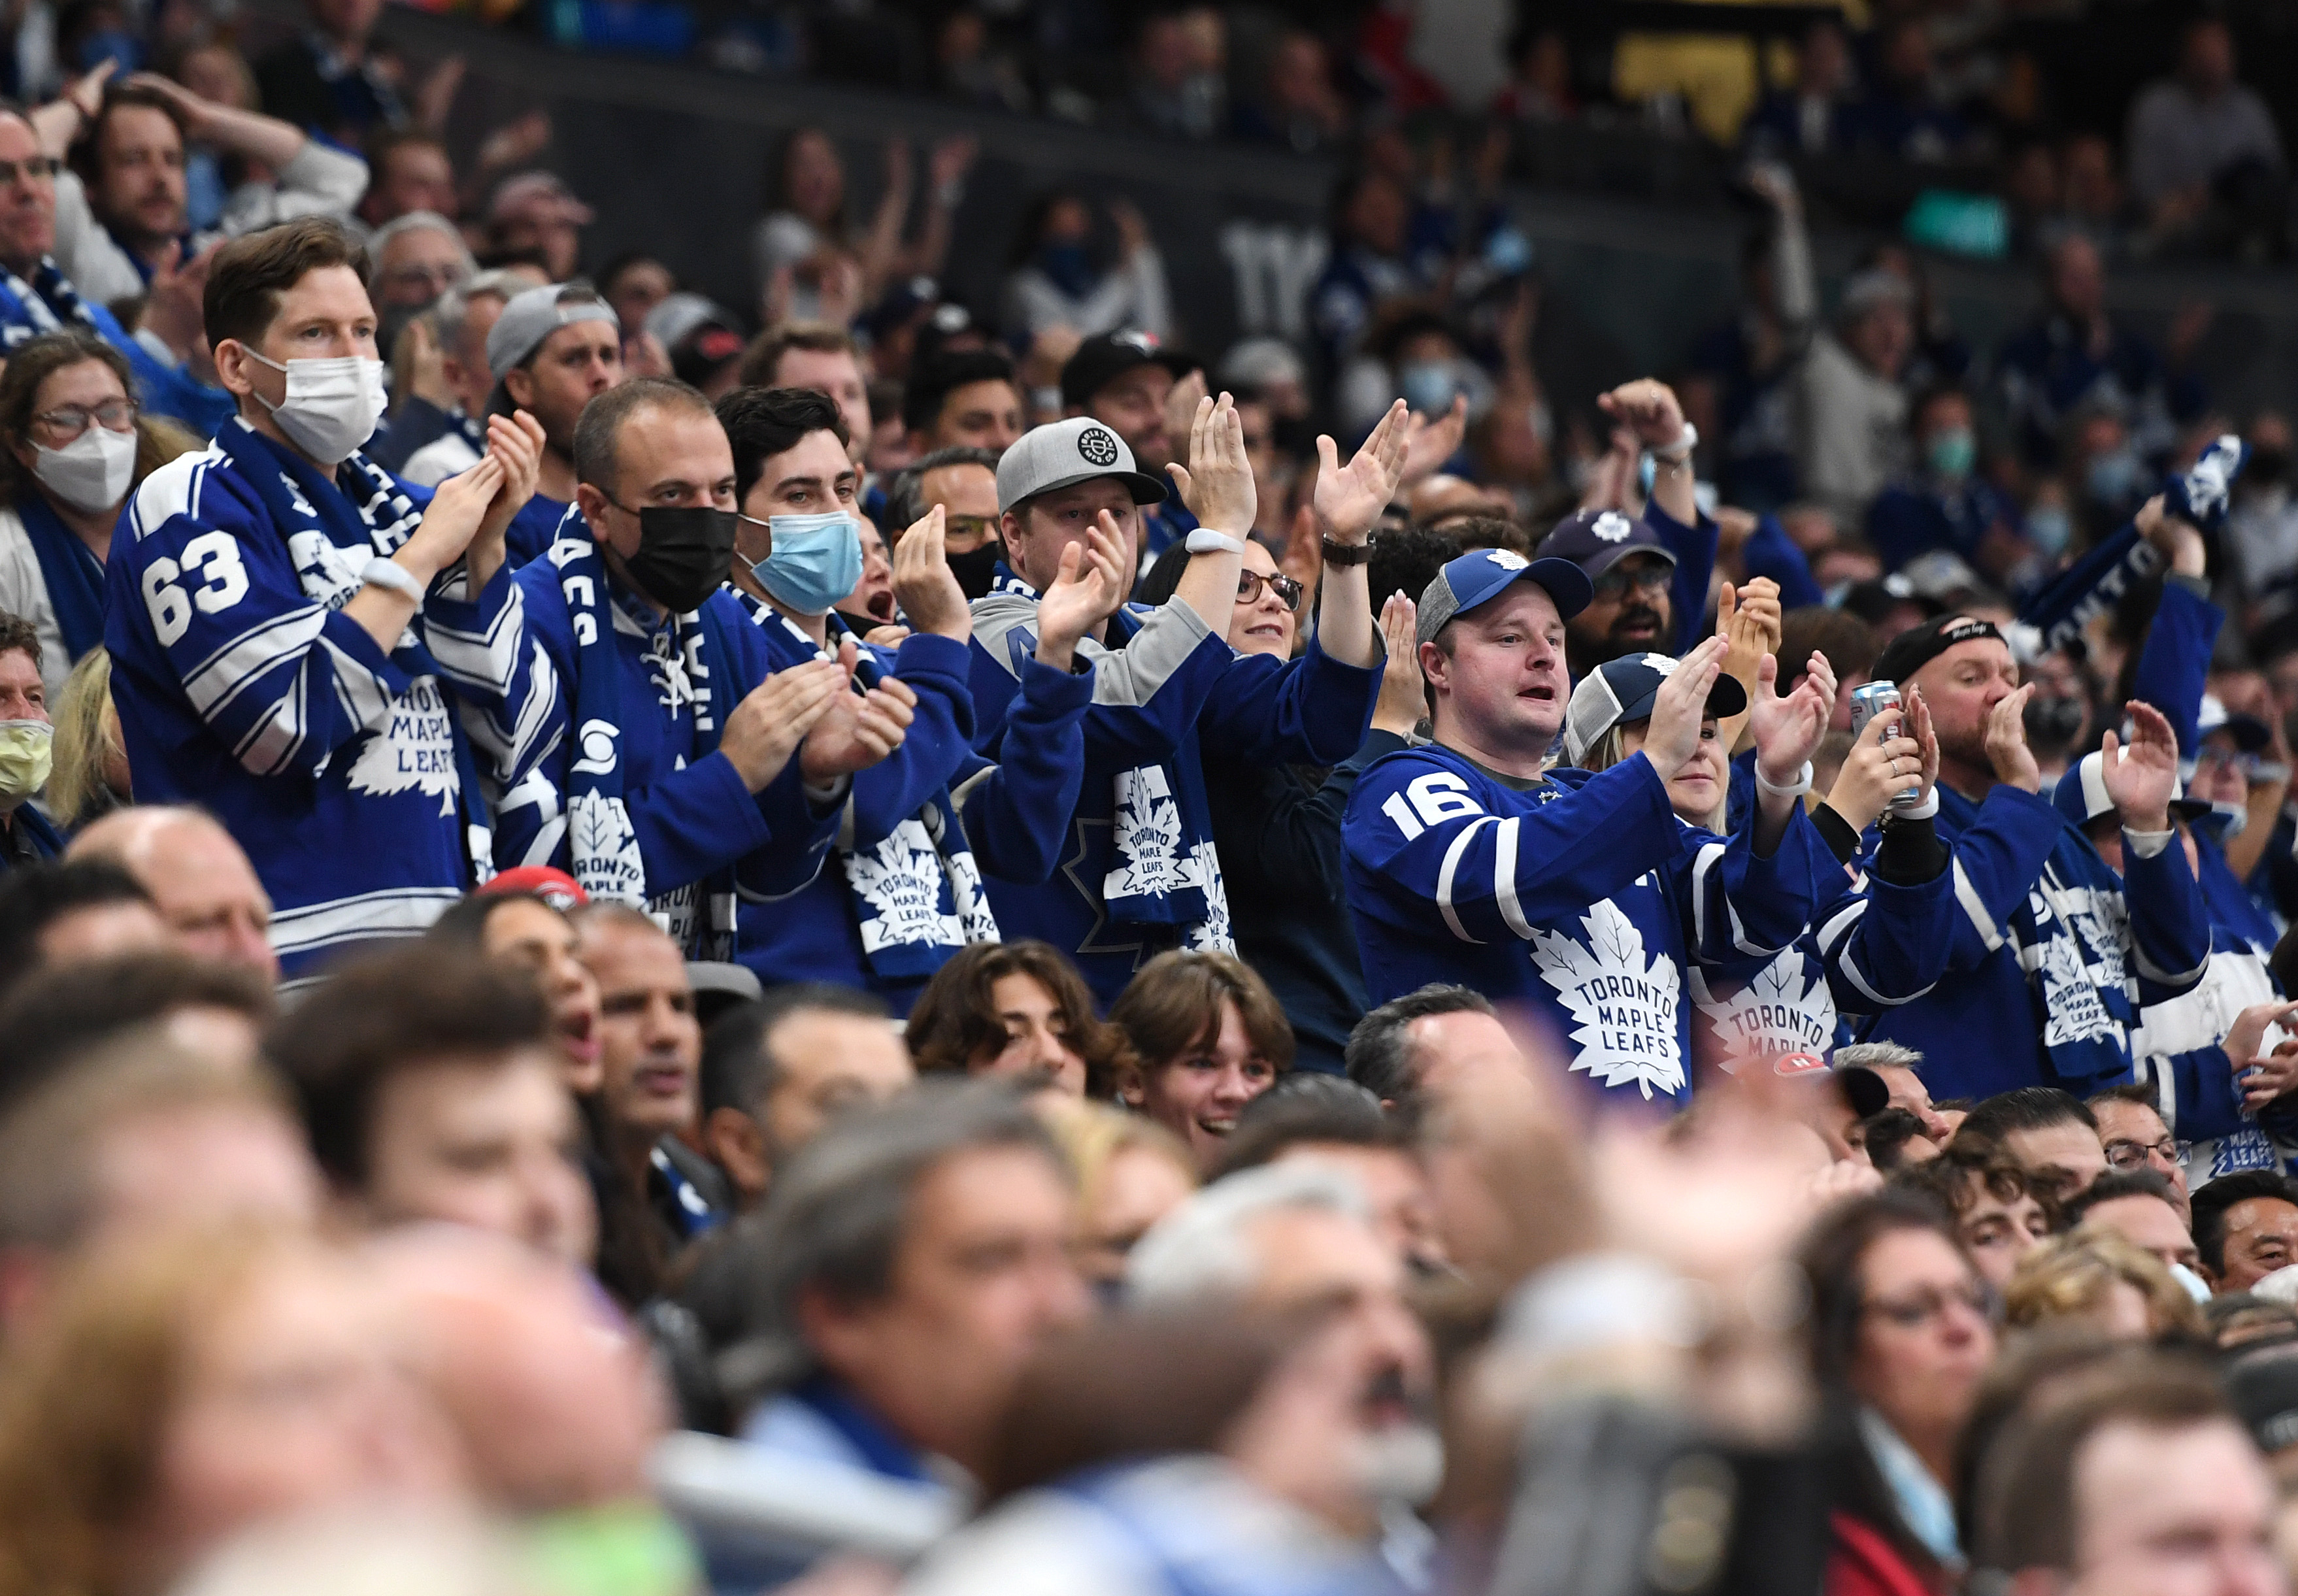 Toronto: Toronto Maple Leafs NHL Game at Scotiabank Arena